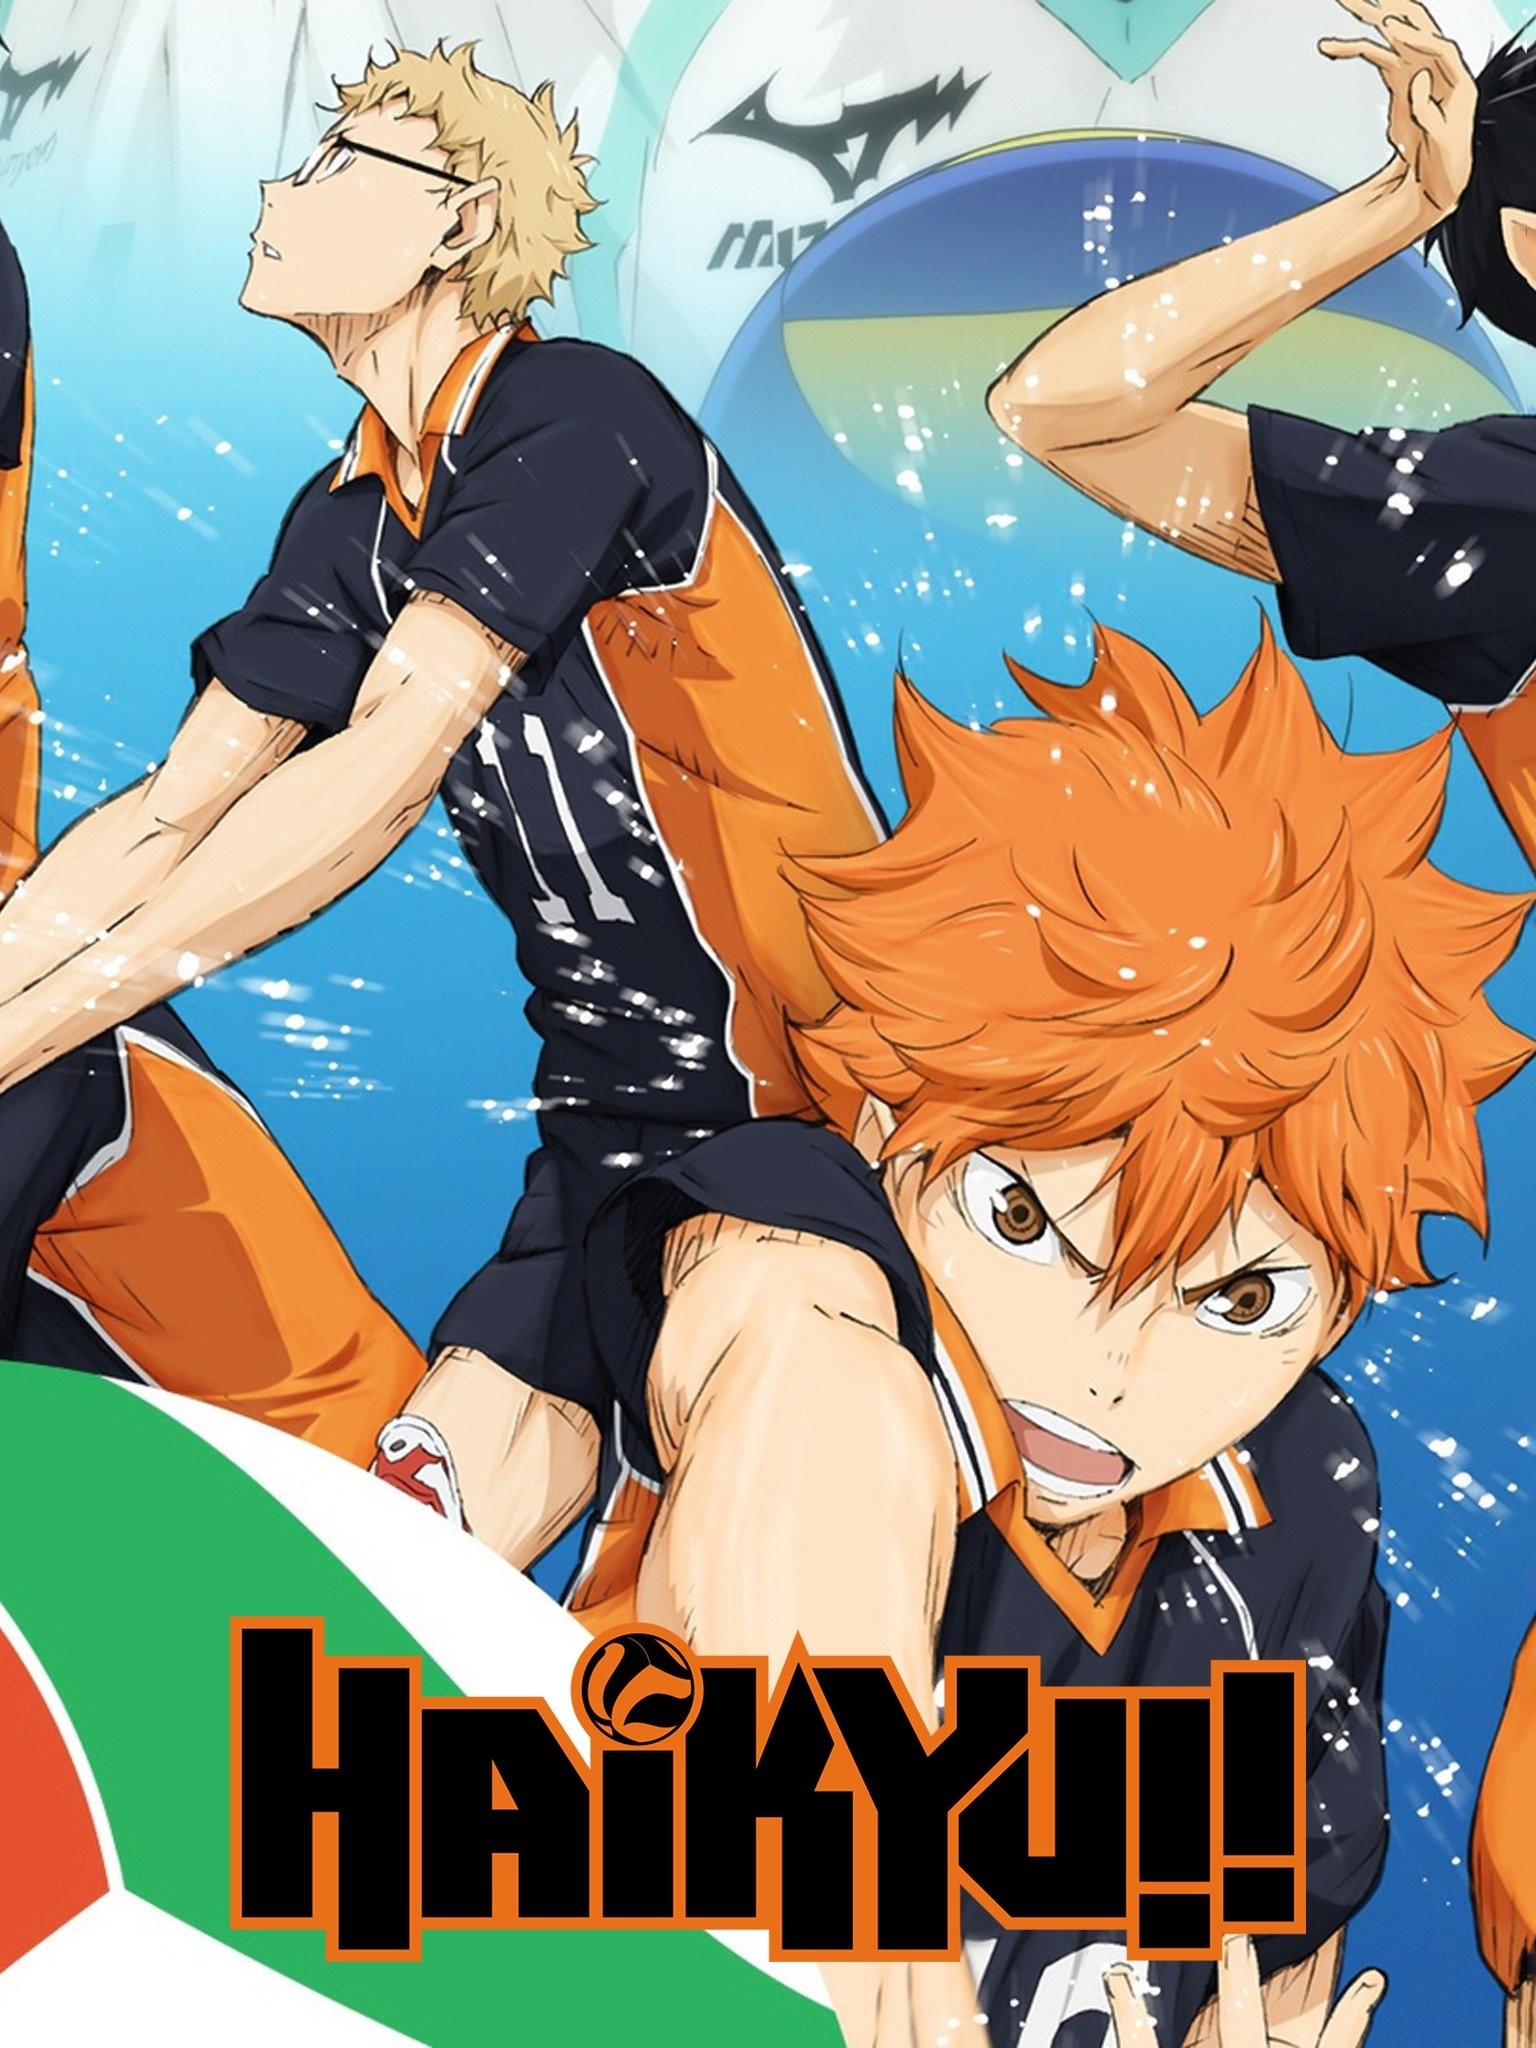 Anime Volleyball Sports Haikyuu  Team Awesome  Digital Art  Entertainment Television Anime  ArtPal